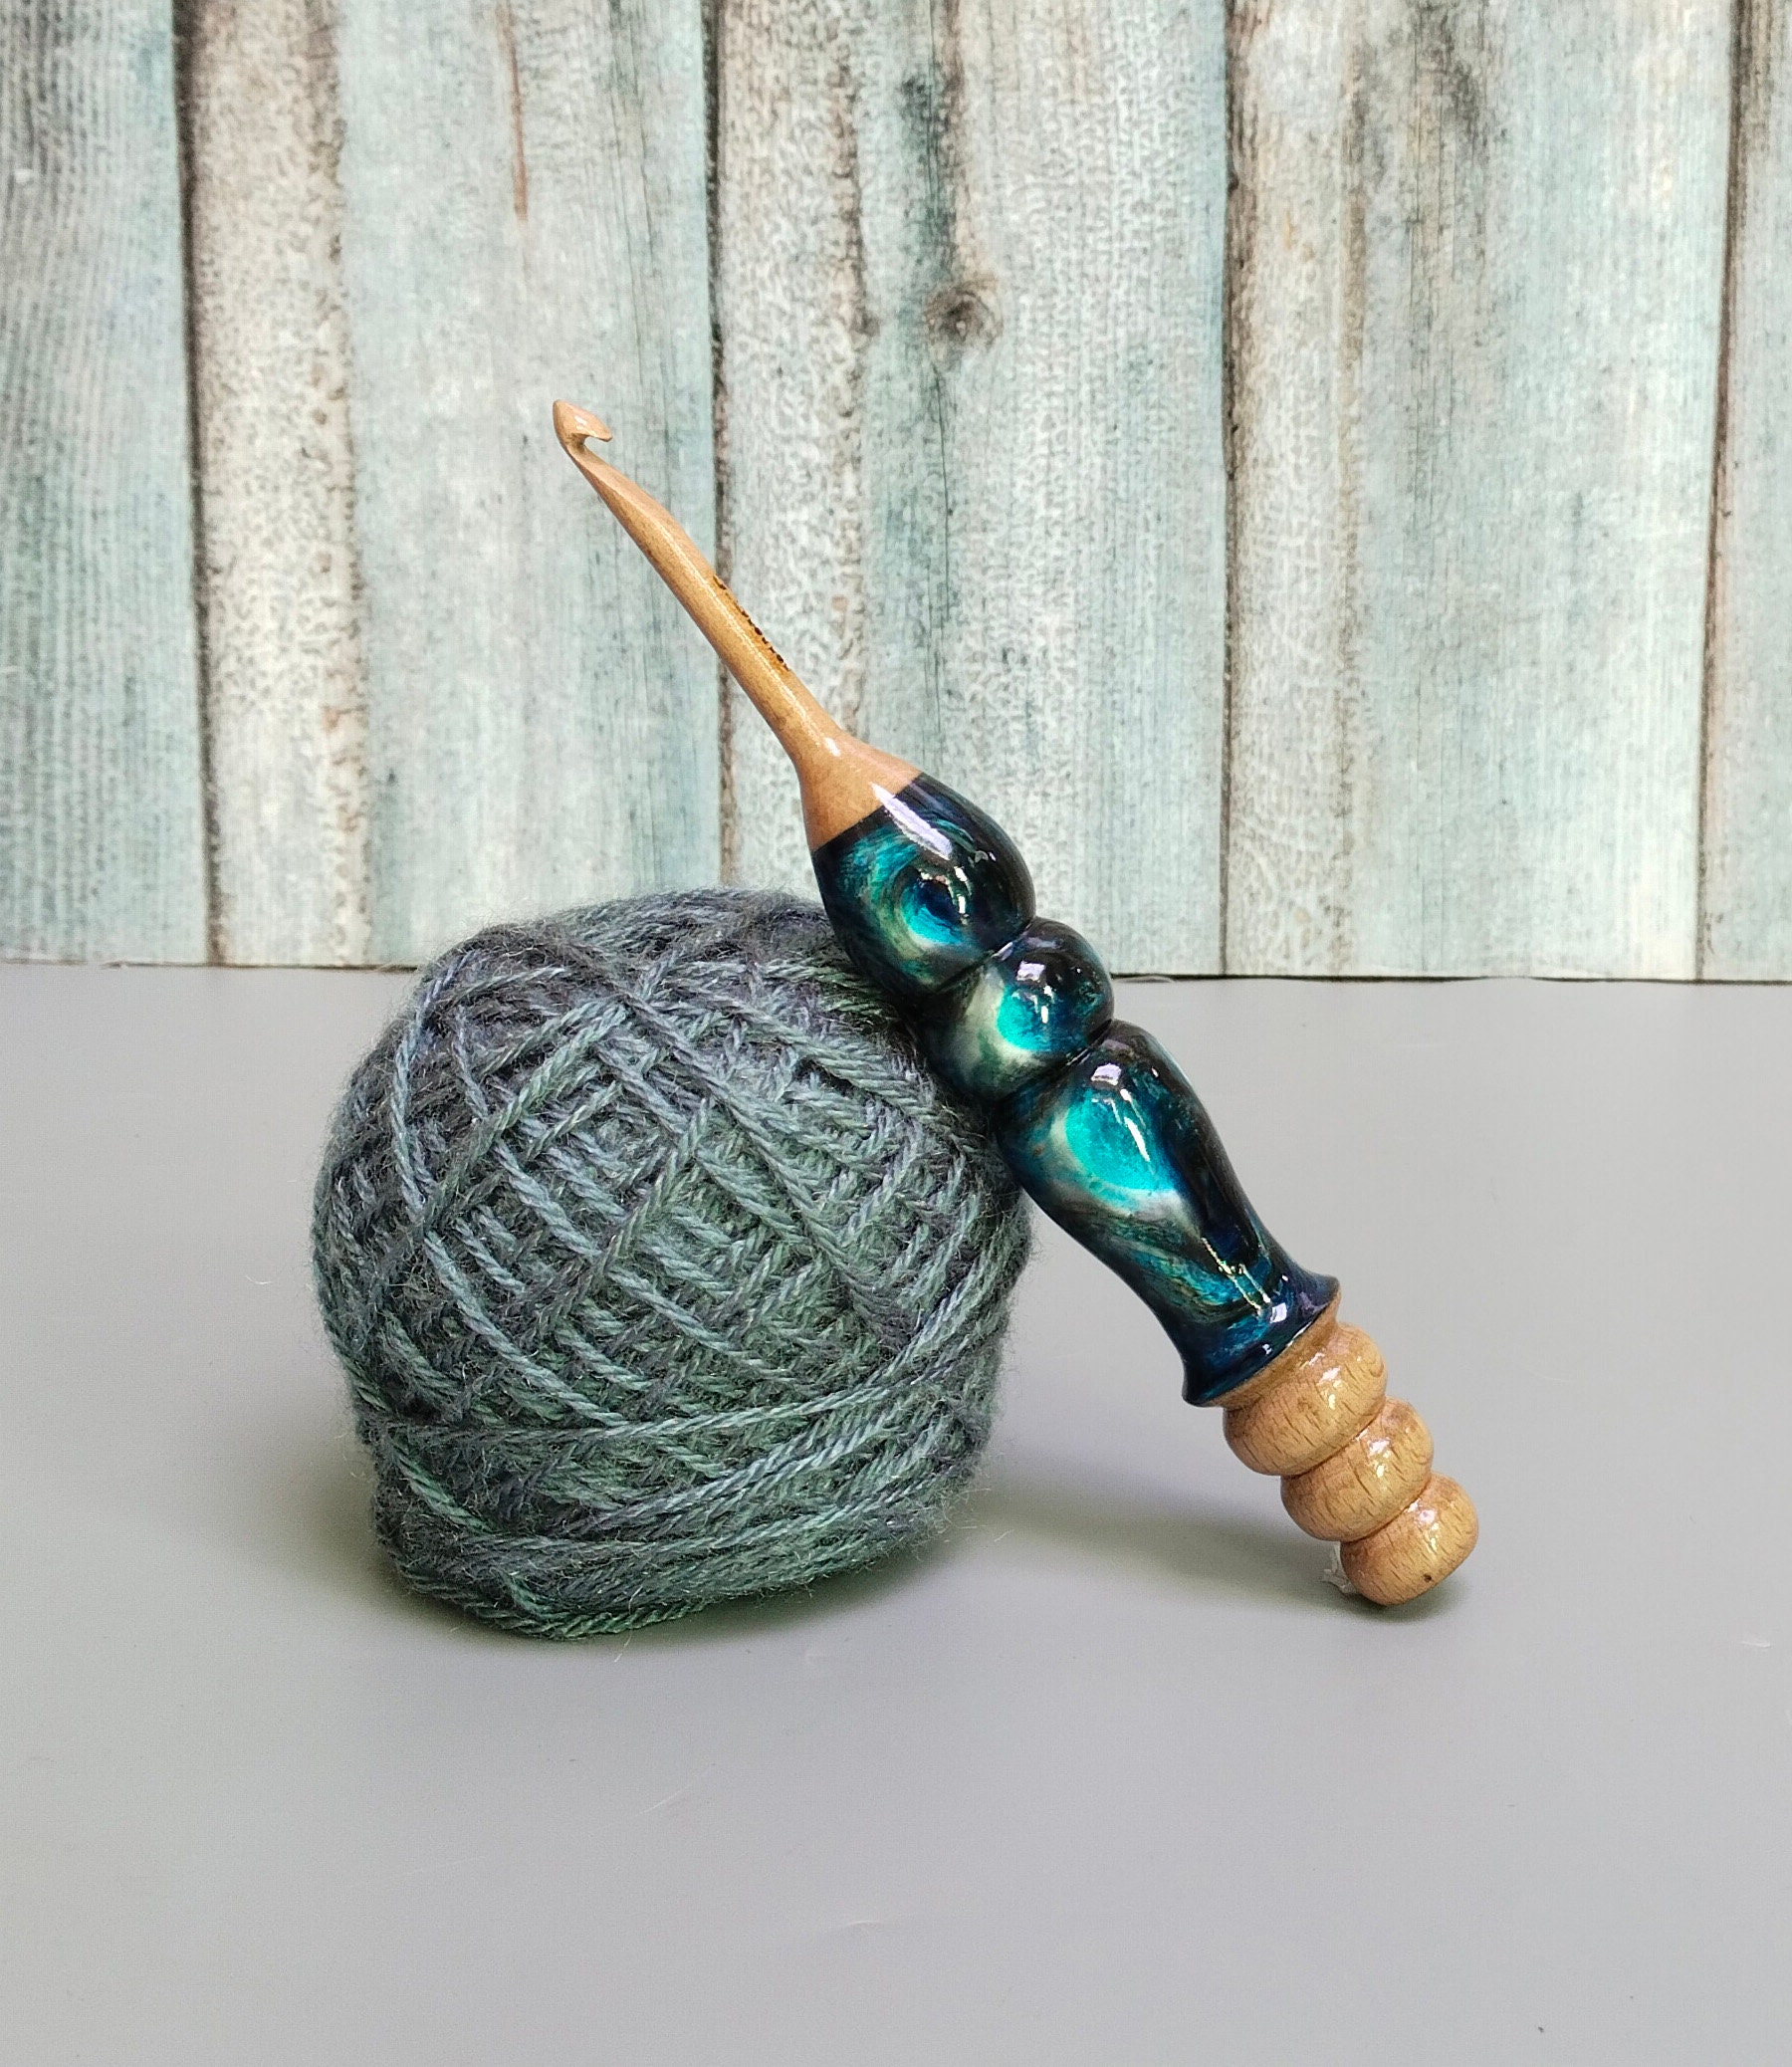 Crochet Hook Set 9 Pieces Ergonomic Crocheting Hooks Easy Grip Colour Coded  Kit 